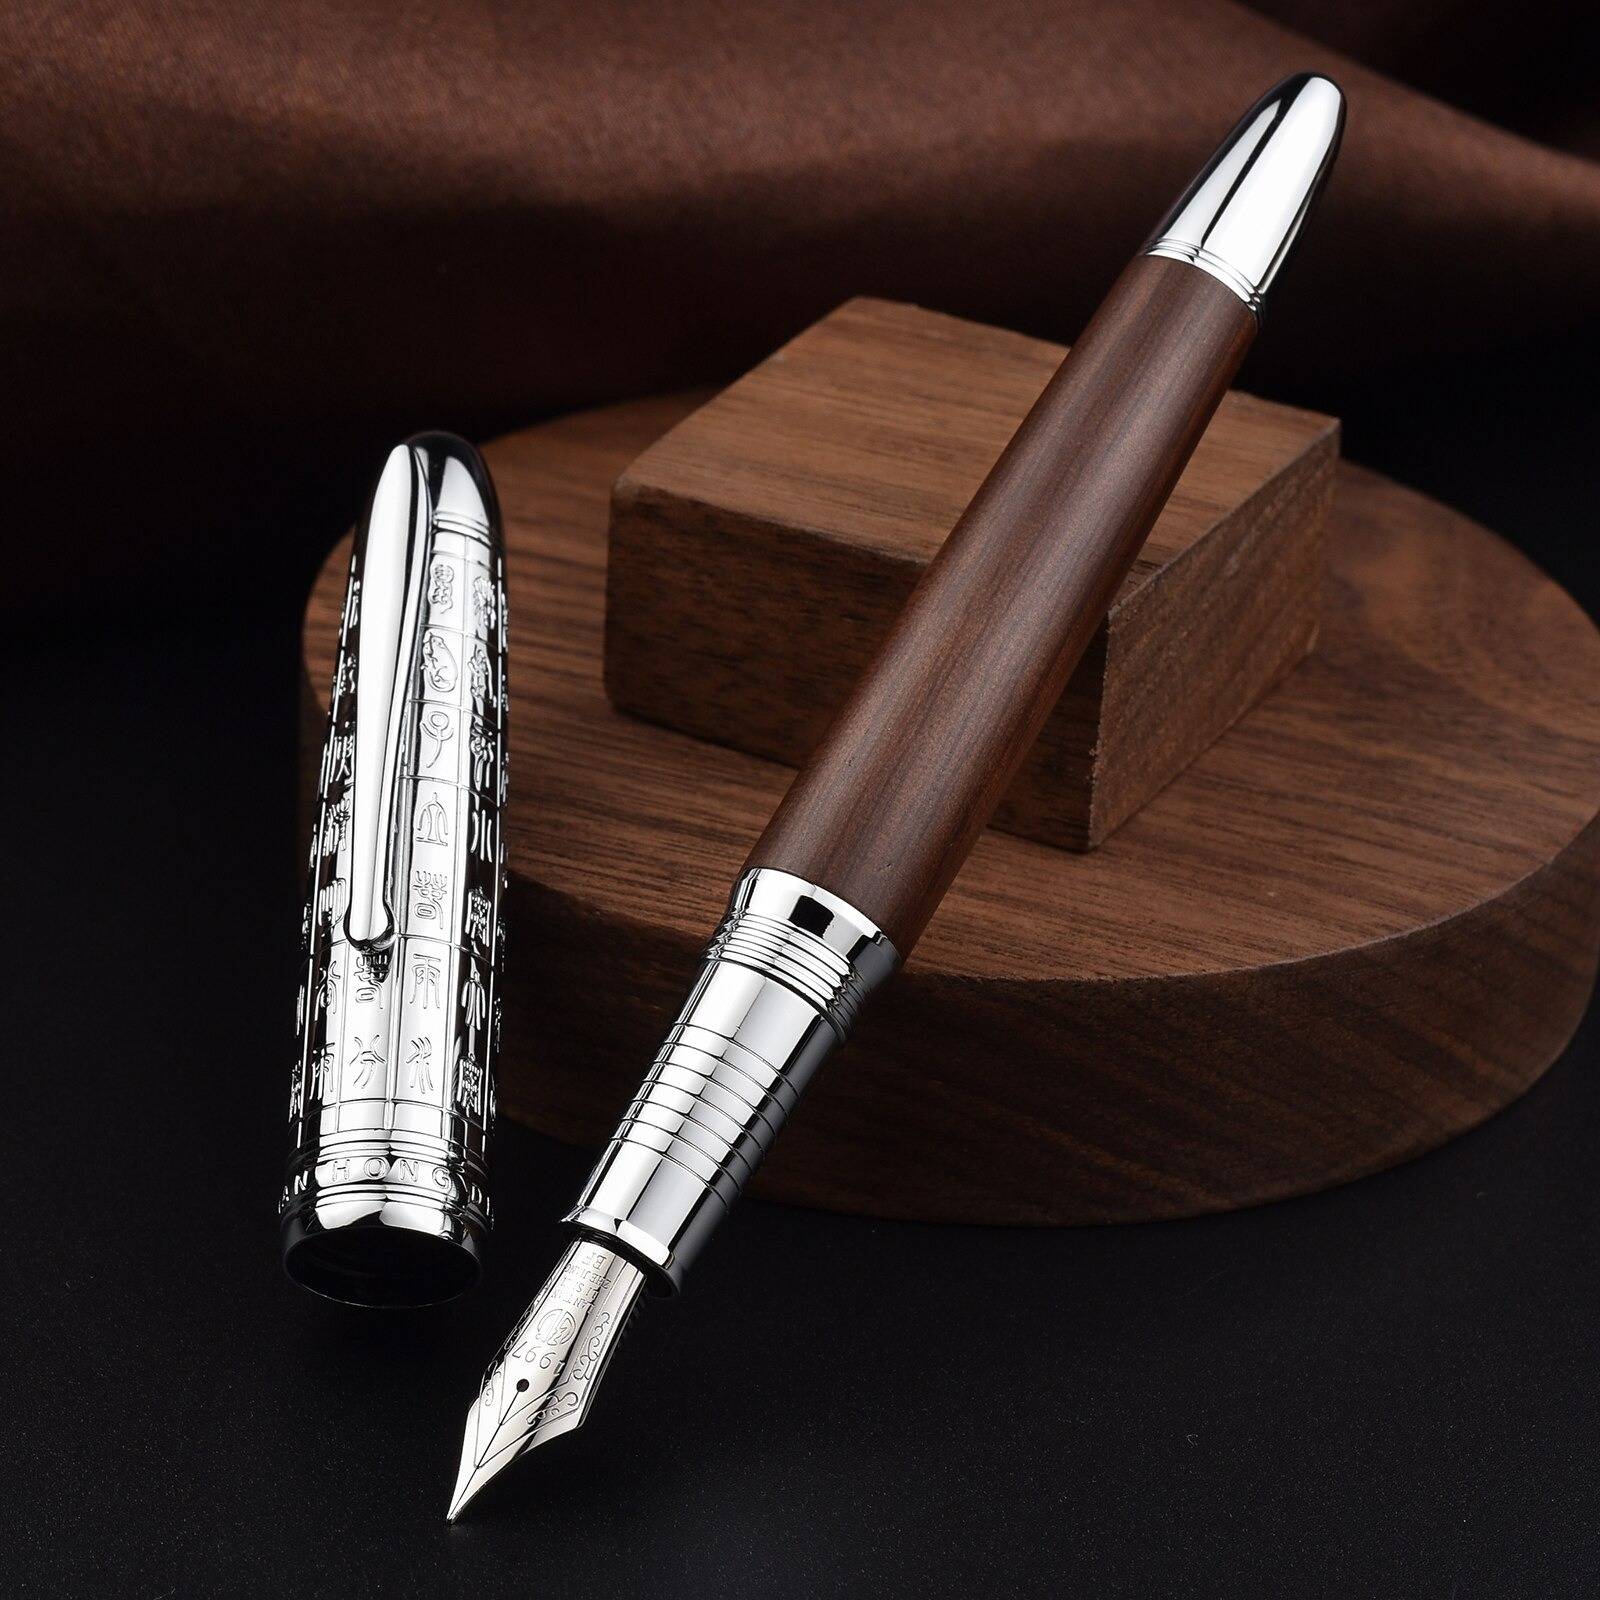 stylo en bois personnalise gravure